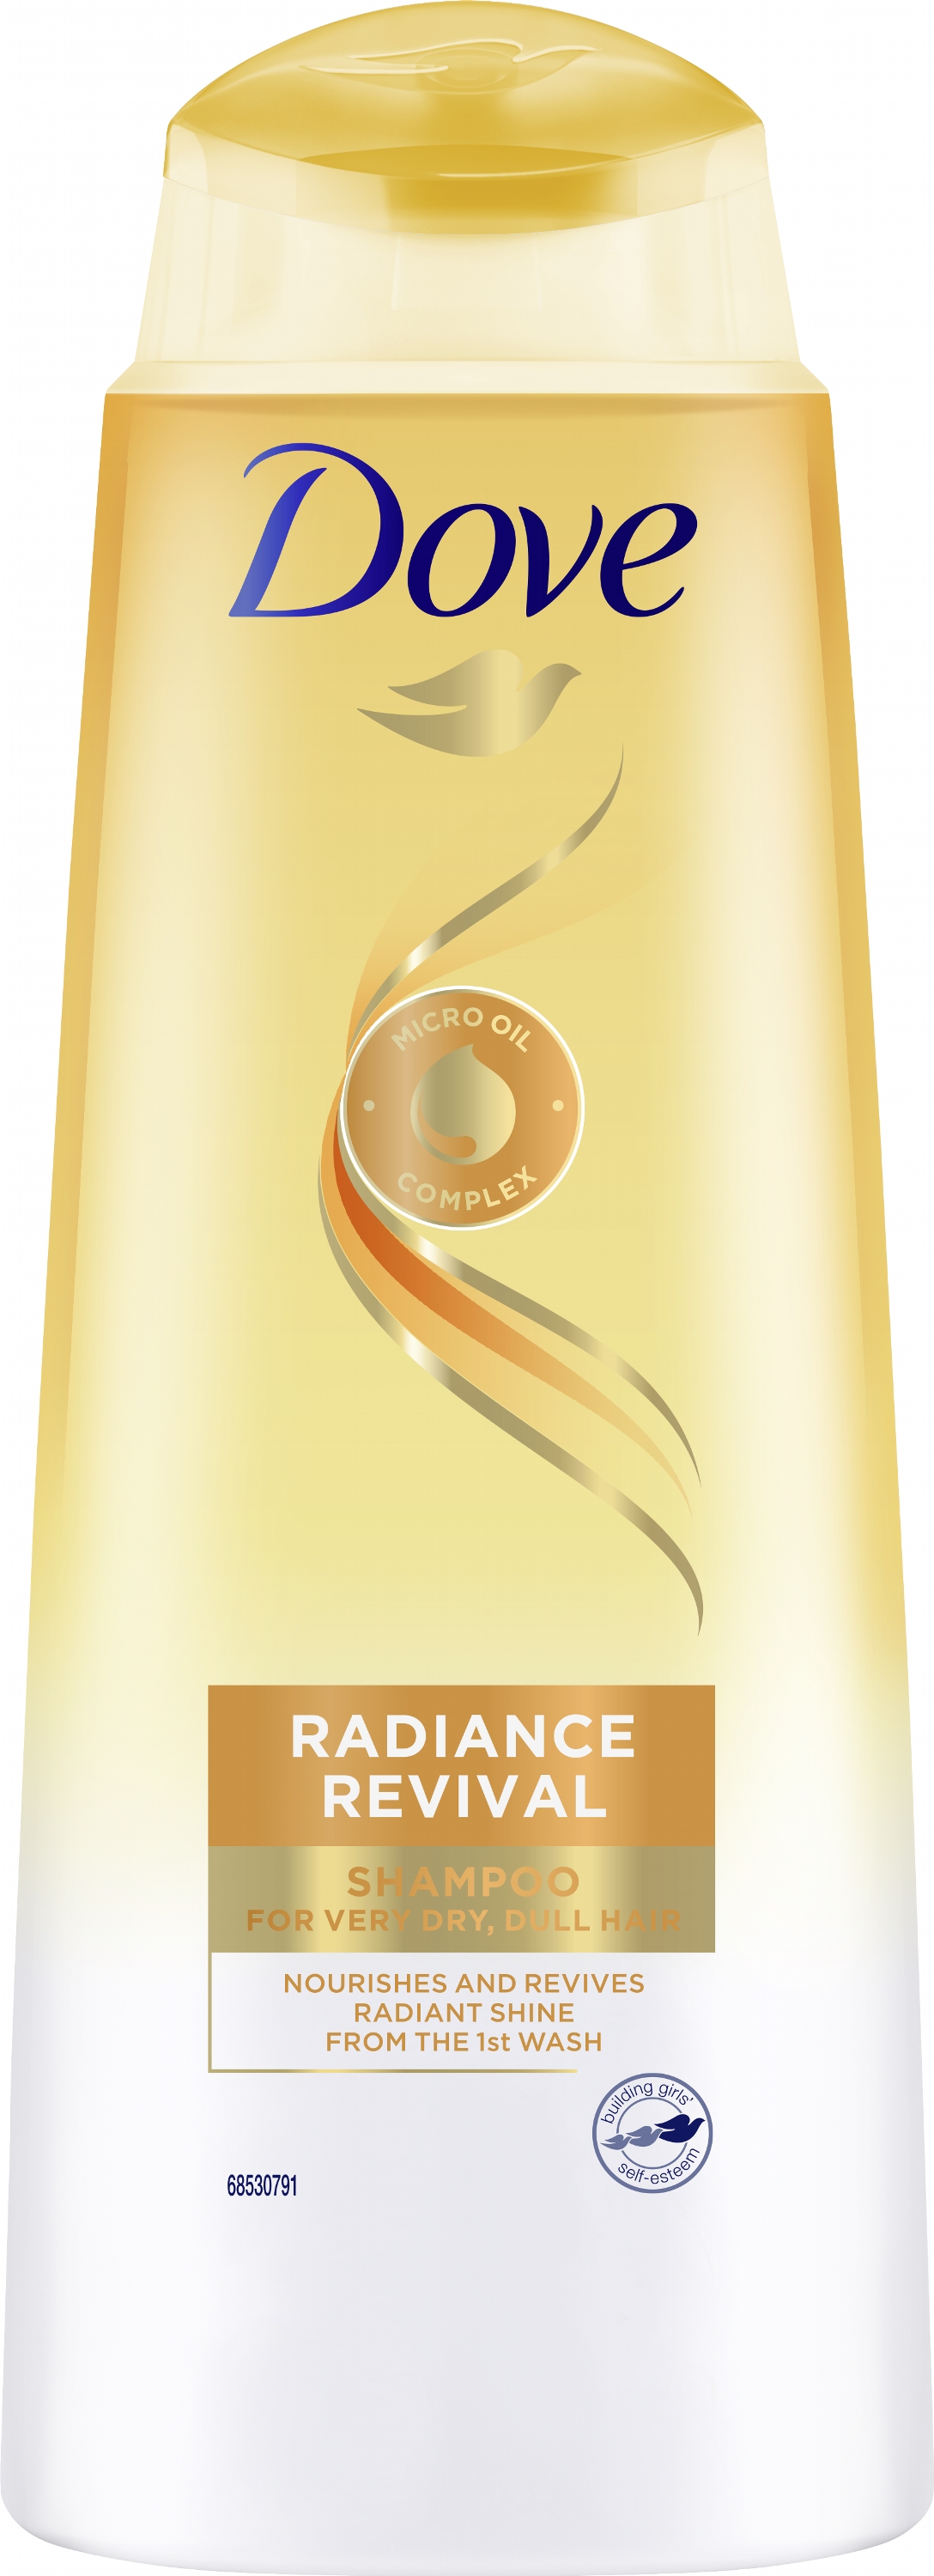 dove radiance revival szampon